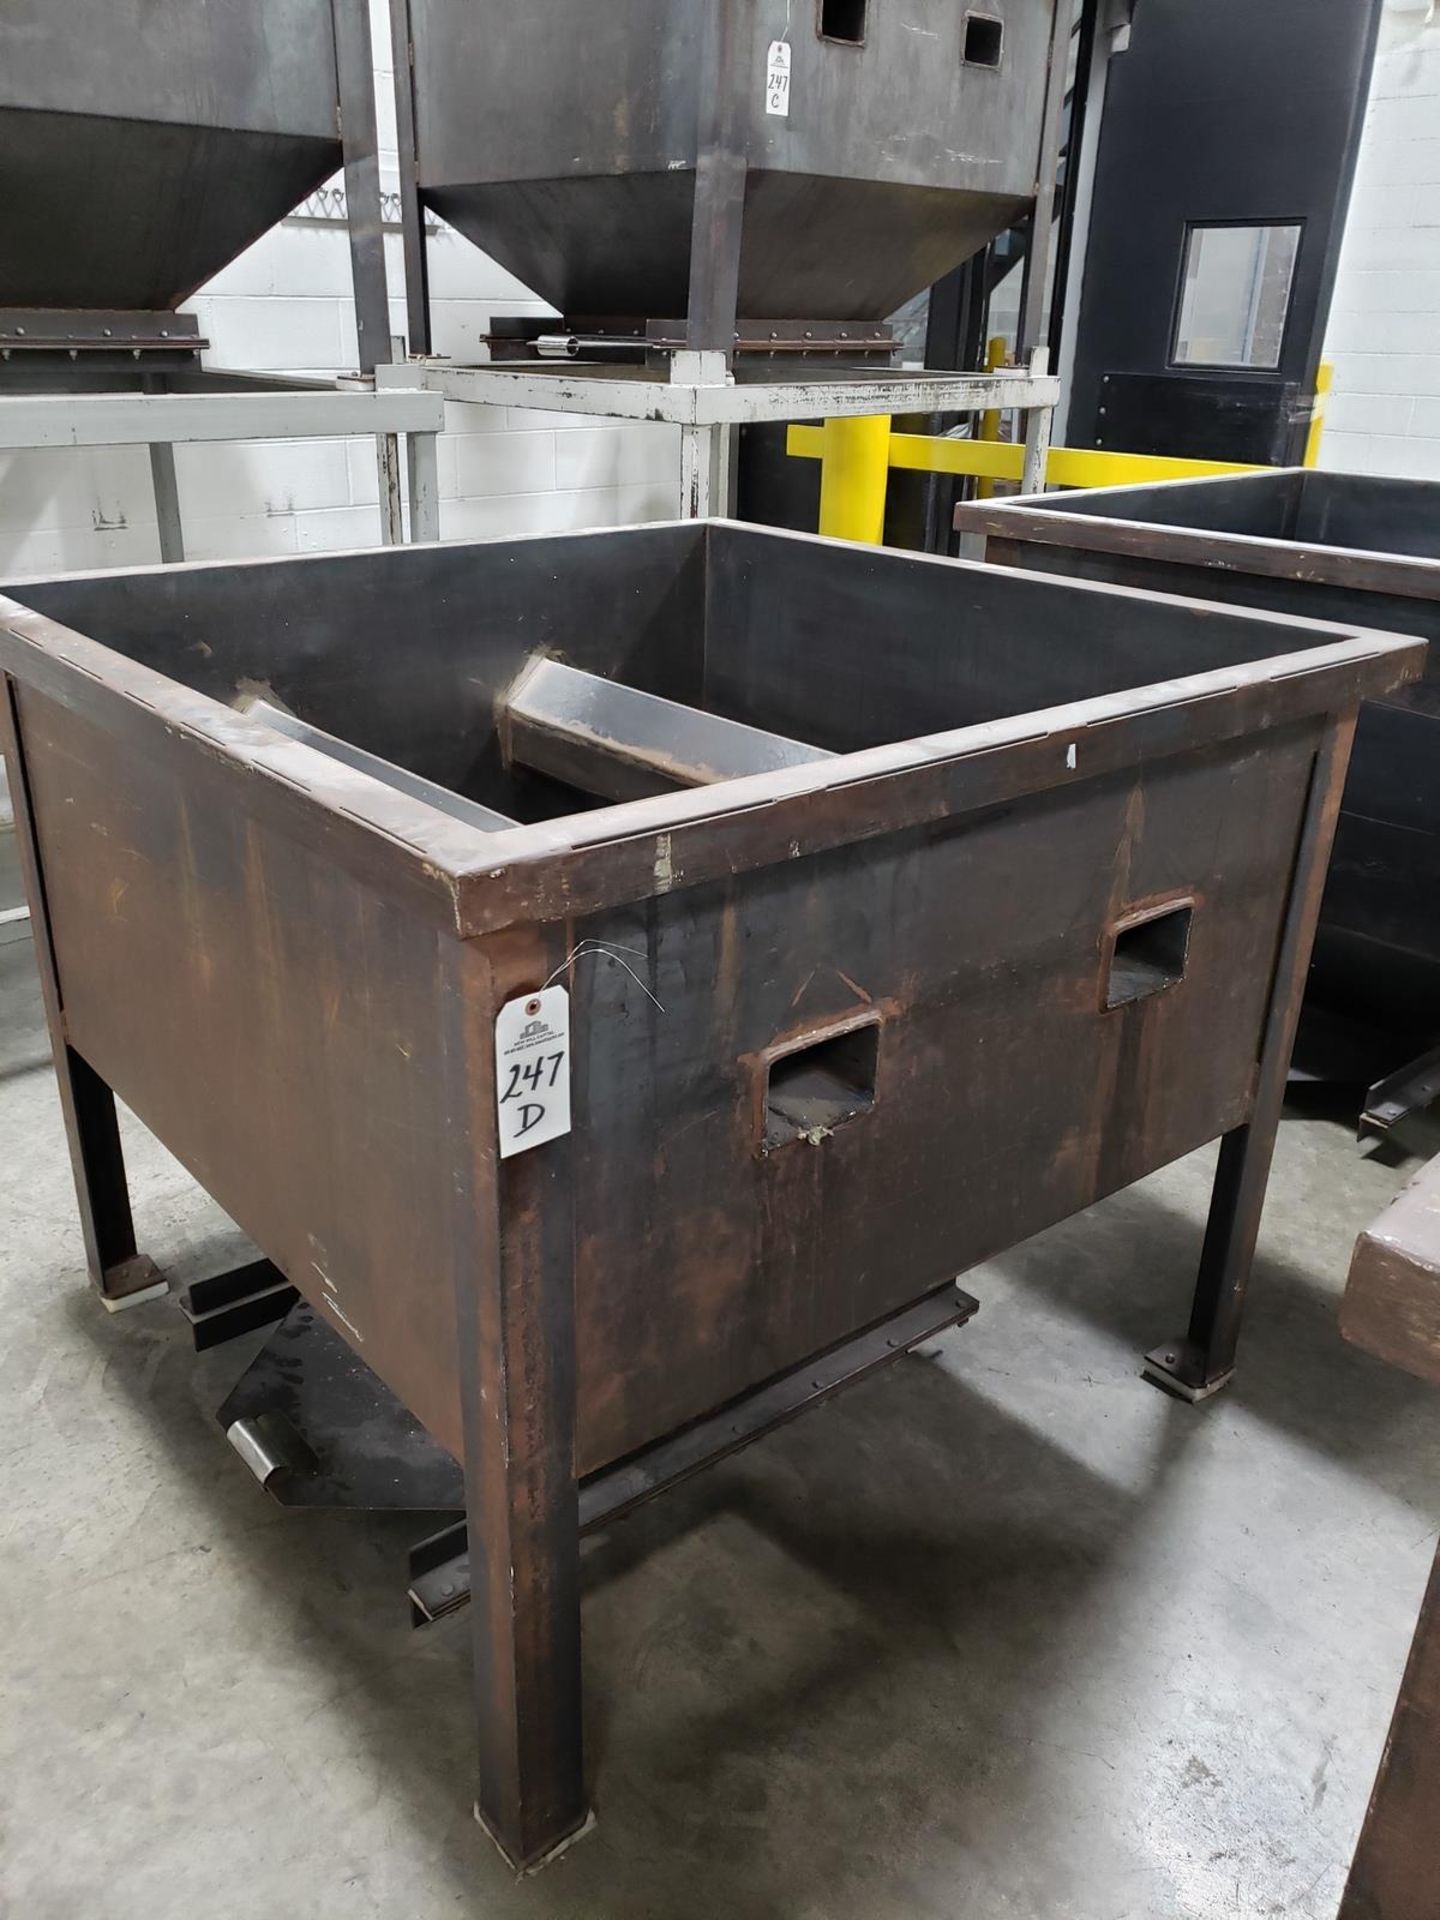 Carbon Steel 2,000 lb. Bottom Dump Hopper | Rig Fee: $100